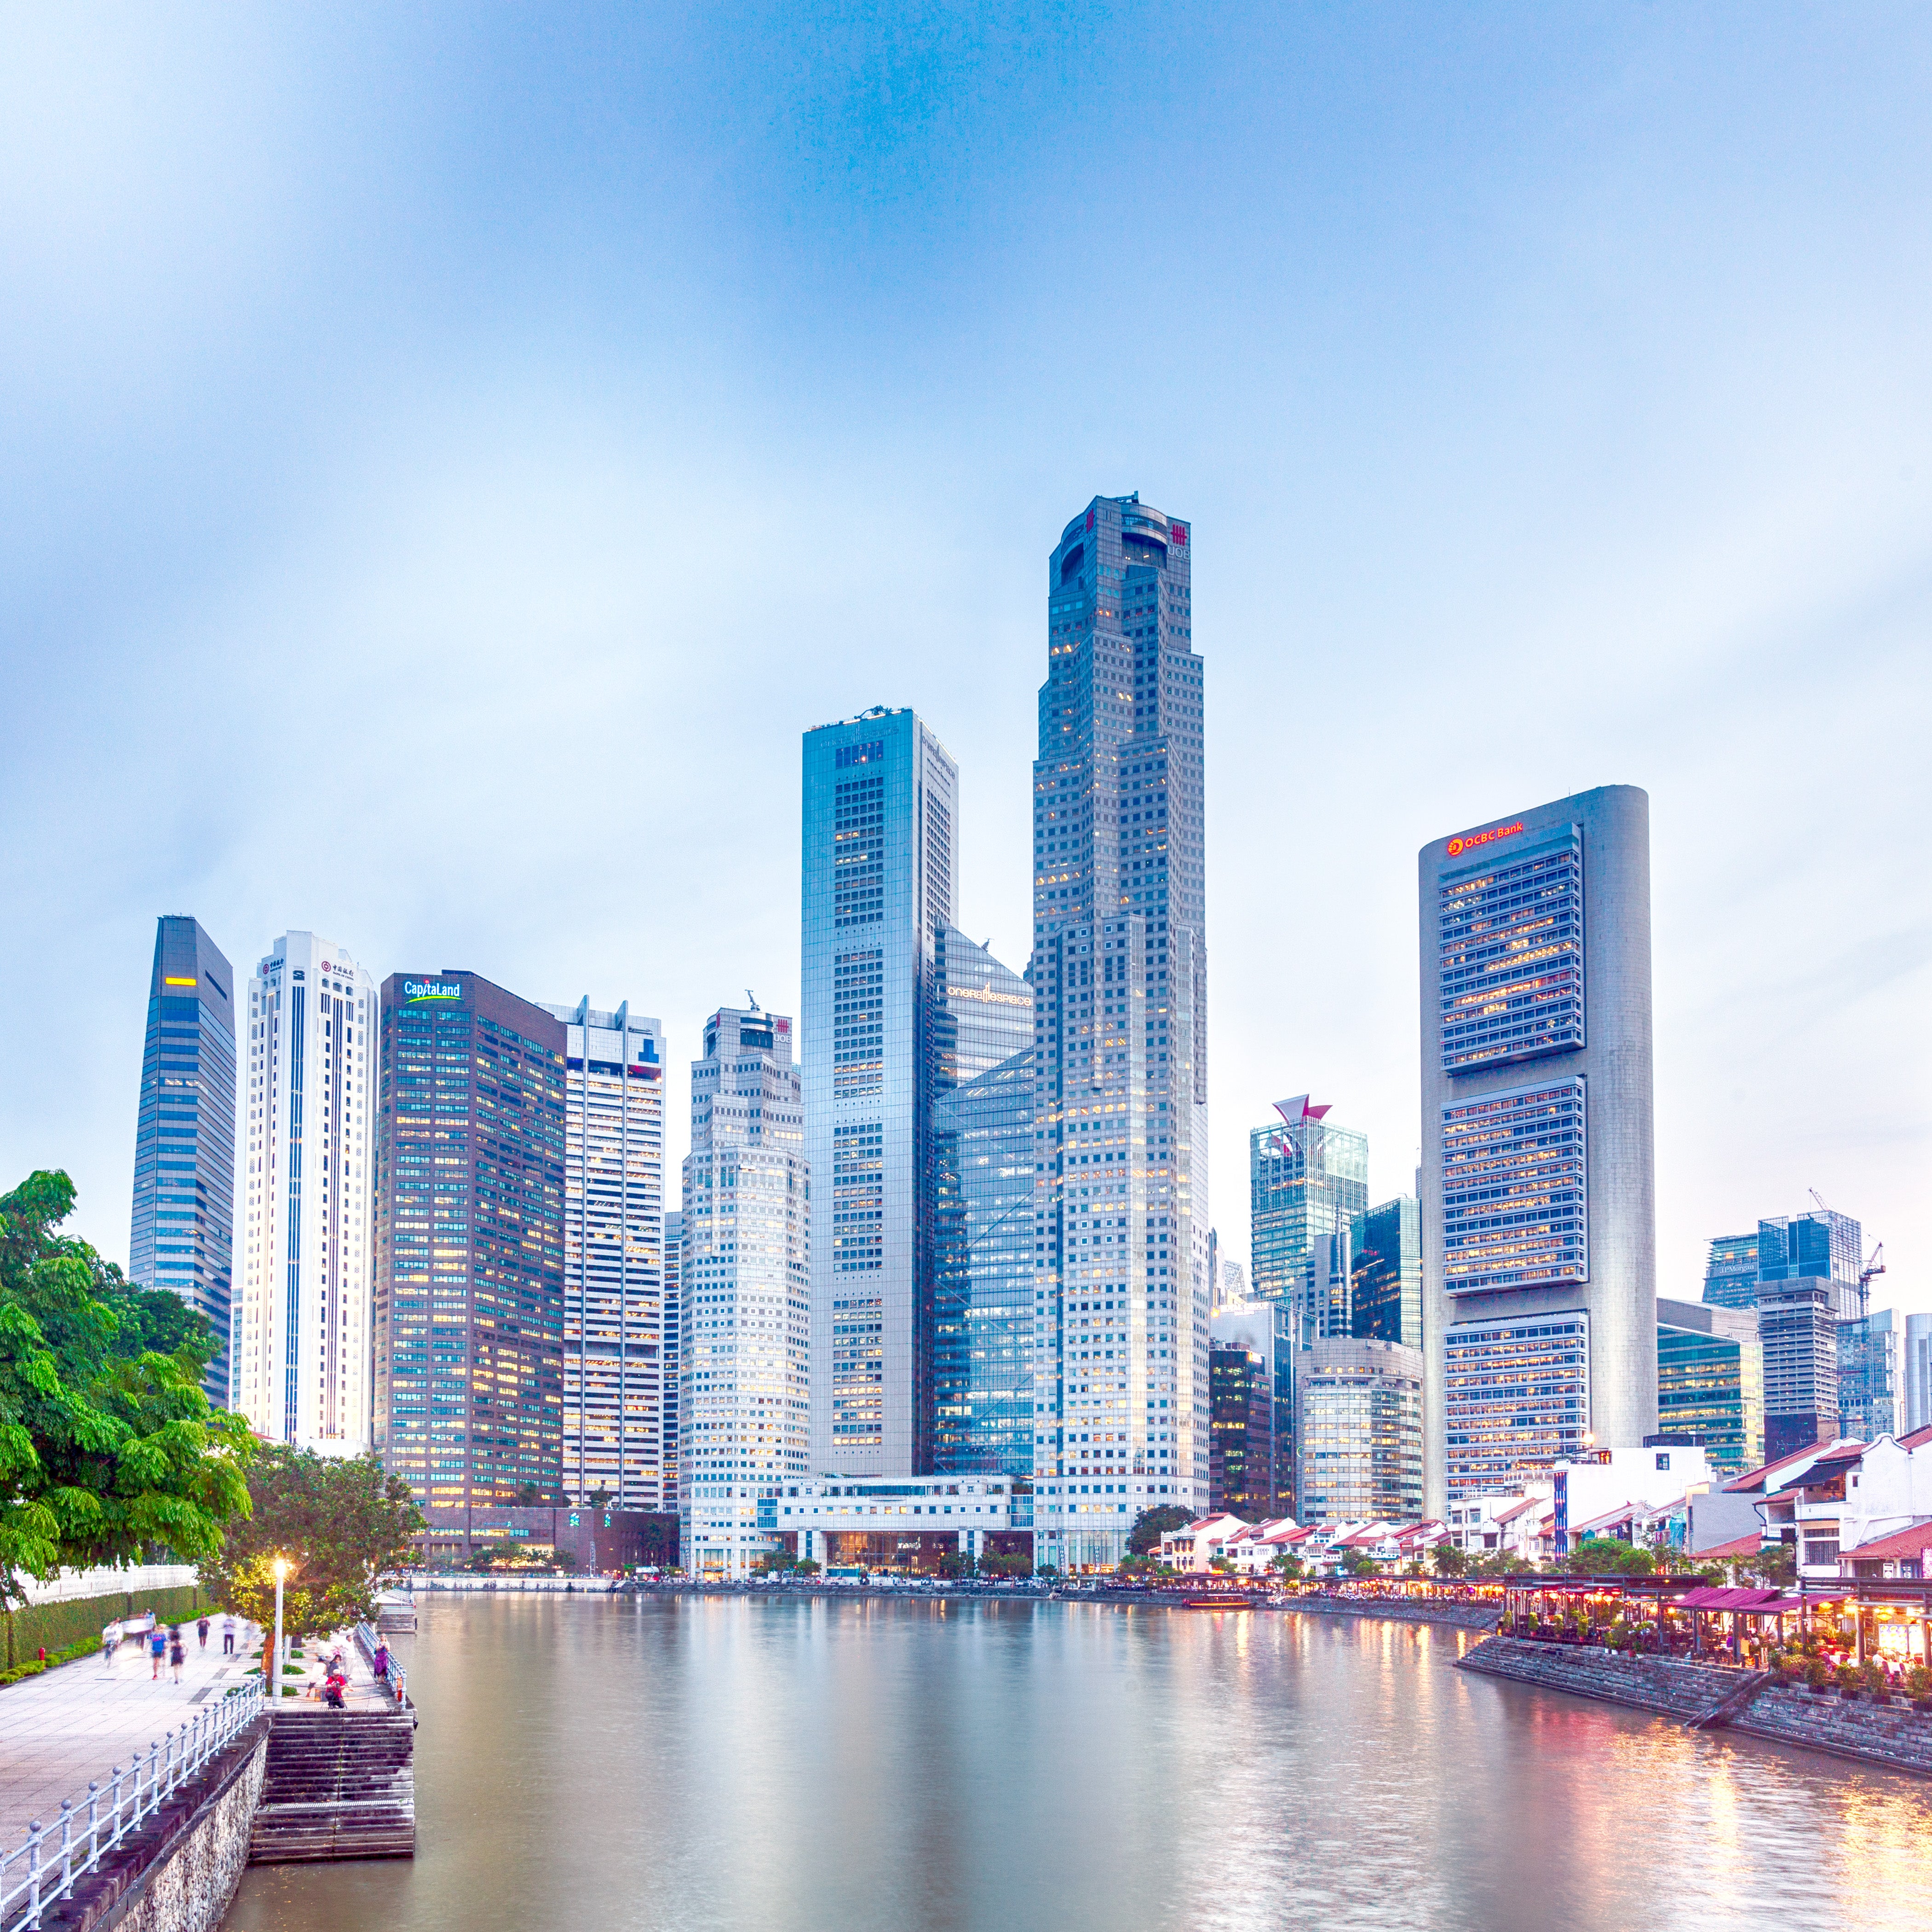 Black Travel Vibes: Get Into The Sky High Views Of Singapore